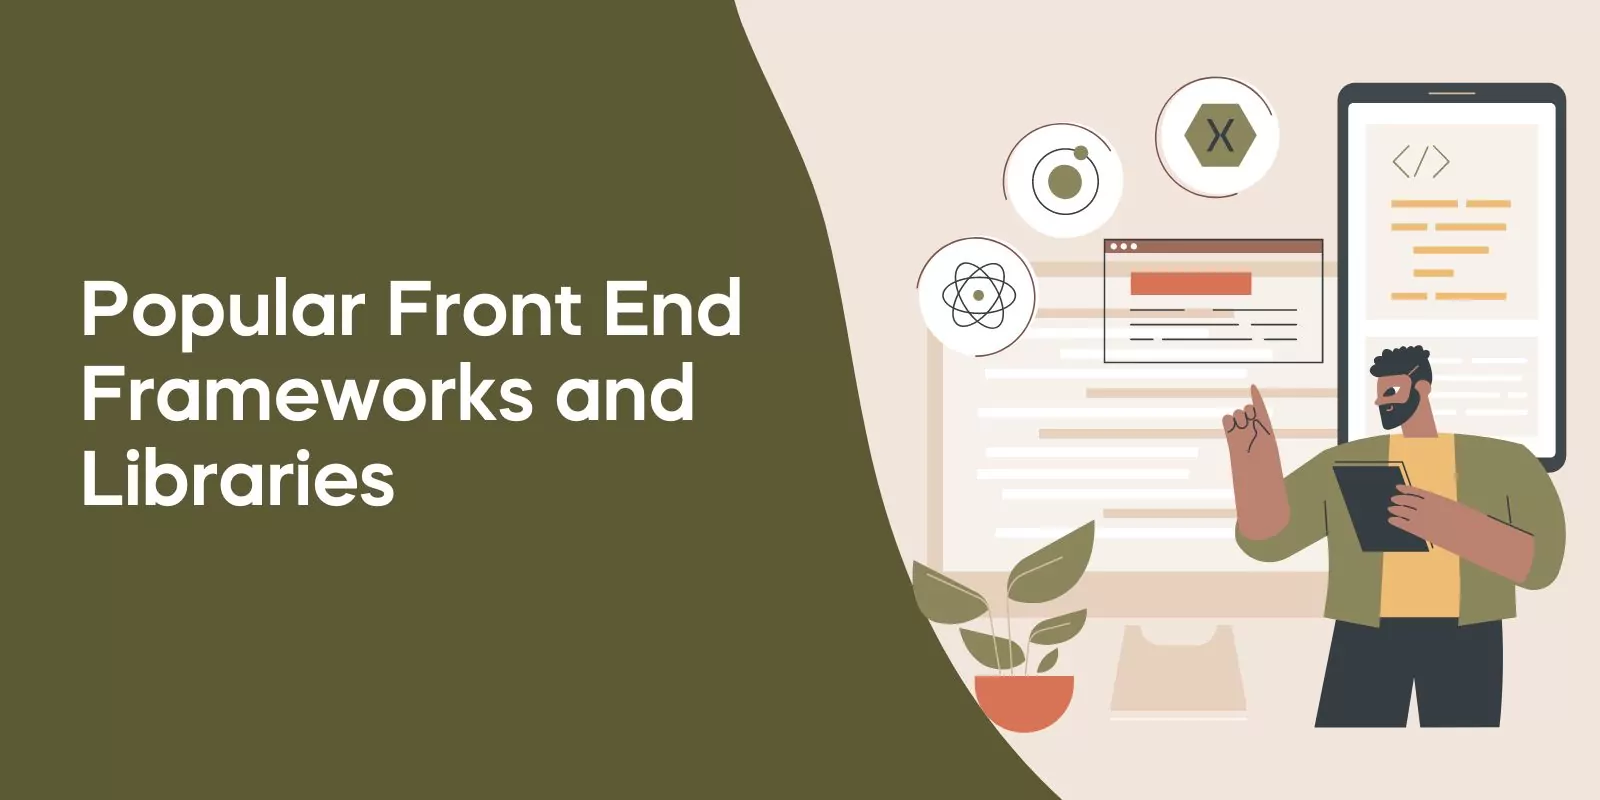 Popular Front End Frameworks and Libraries